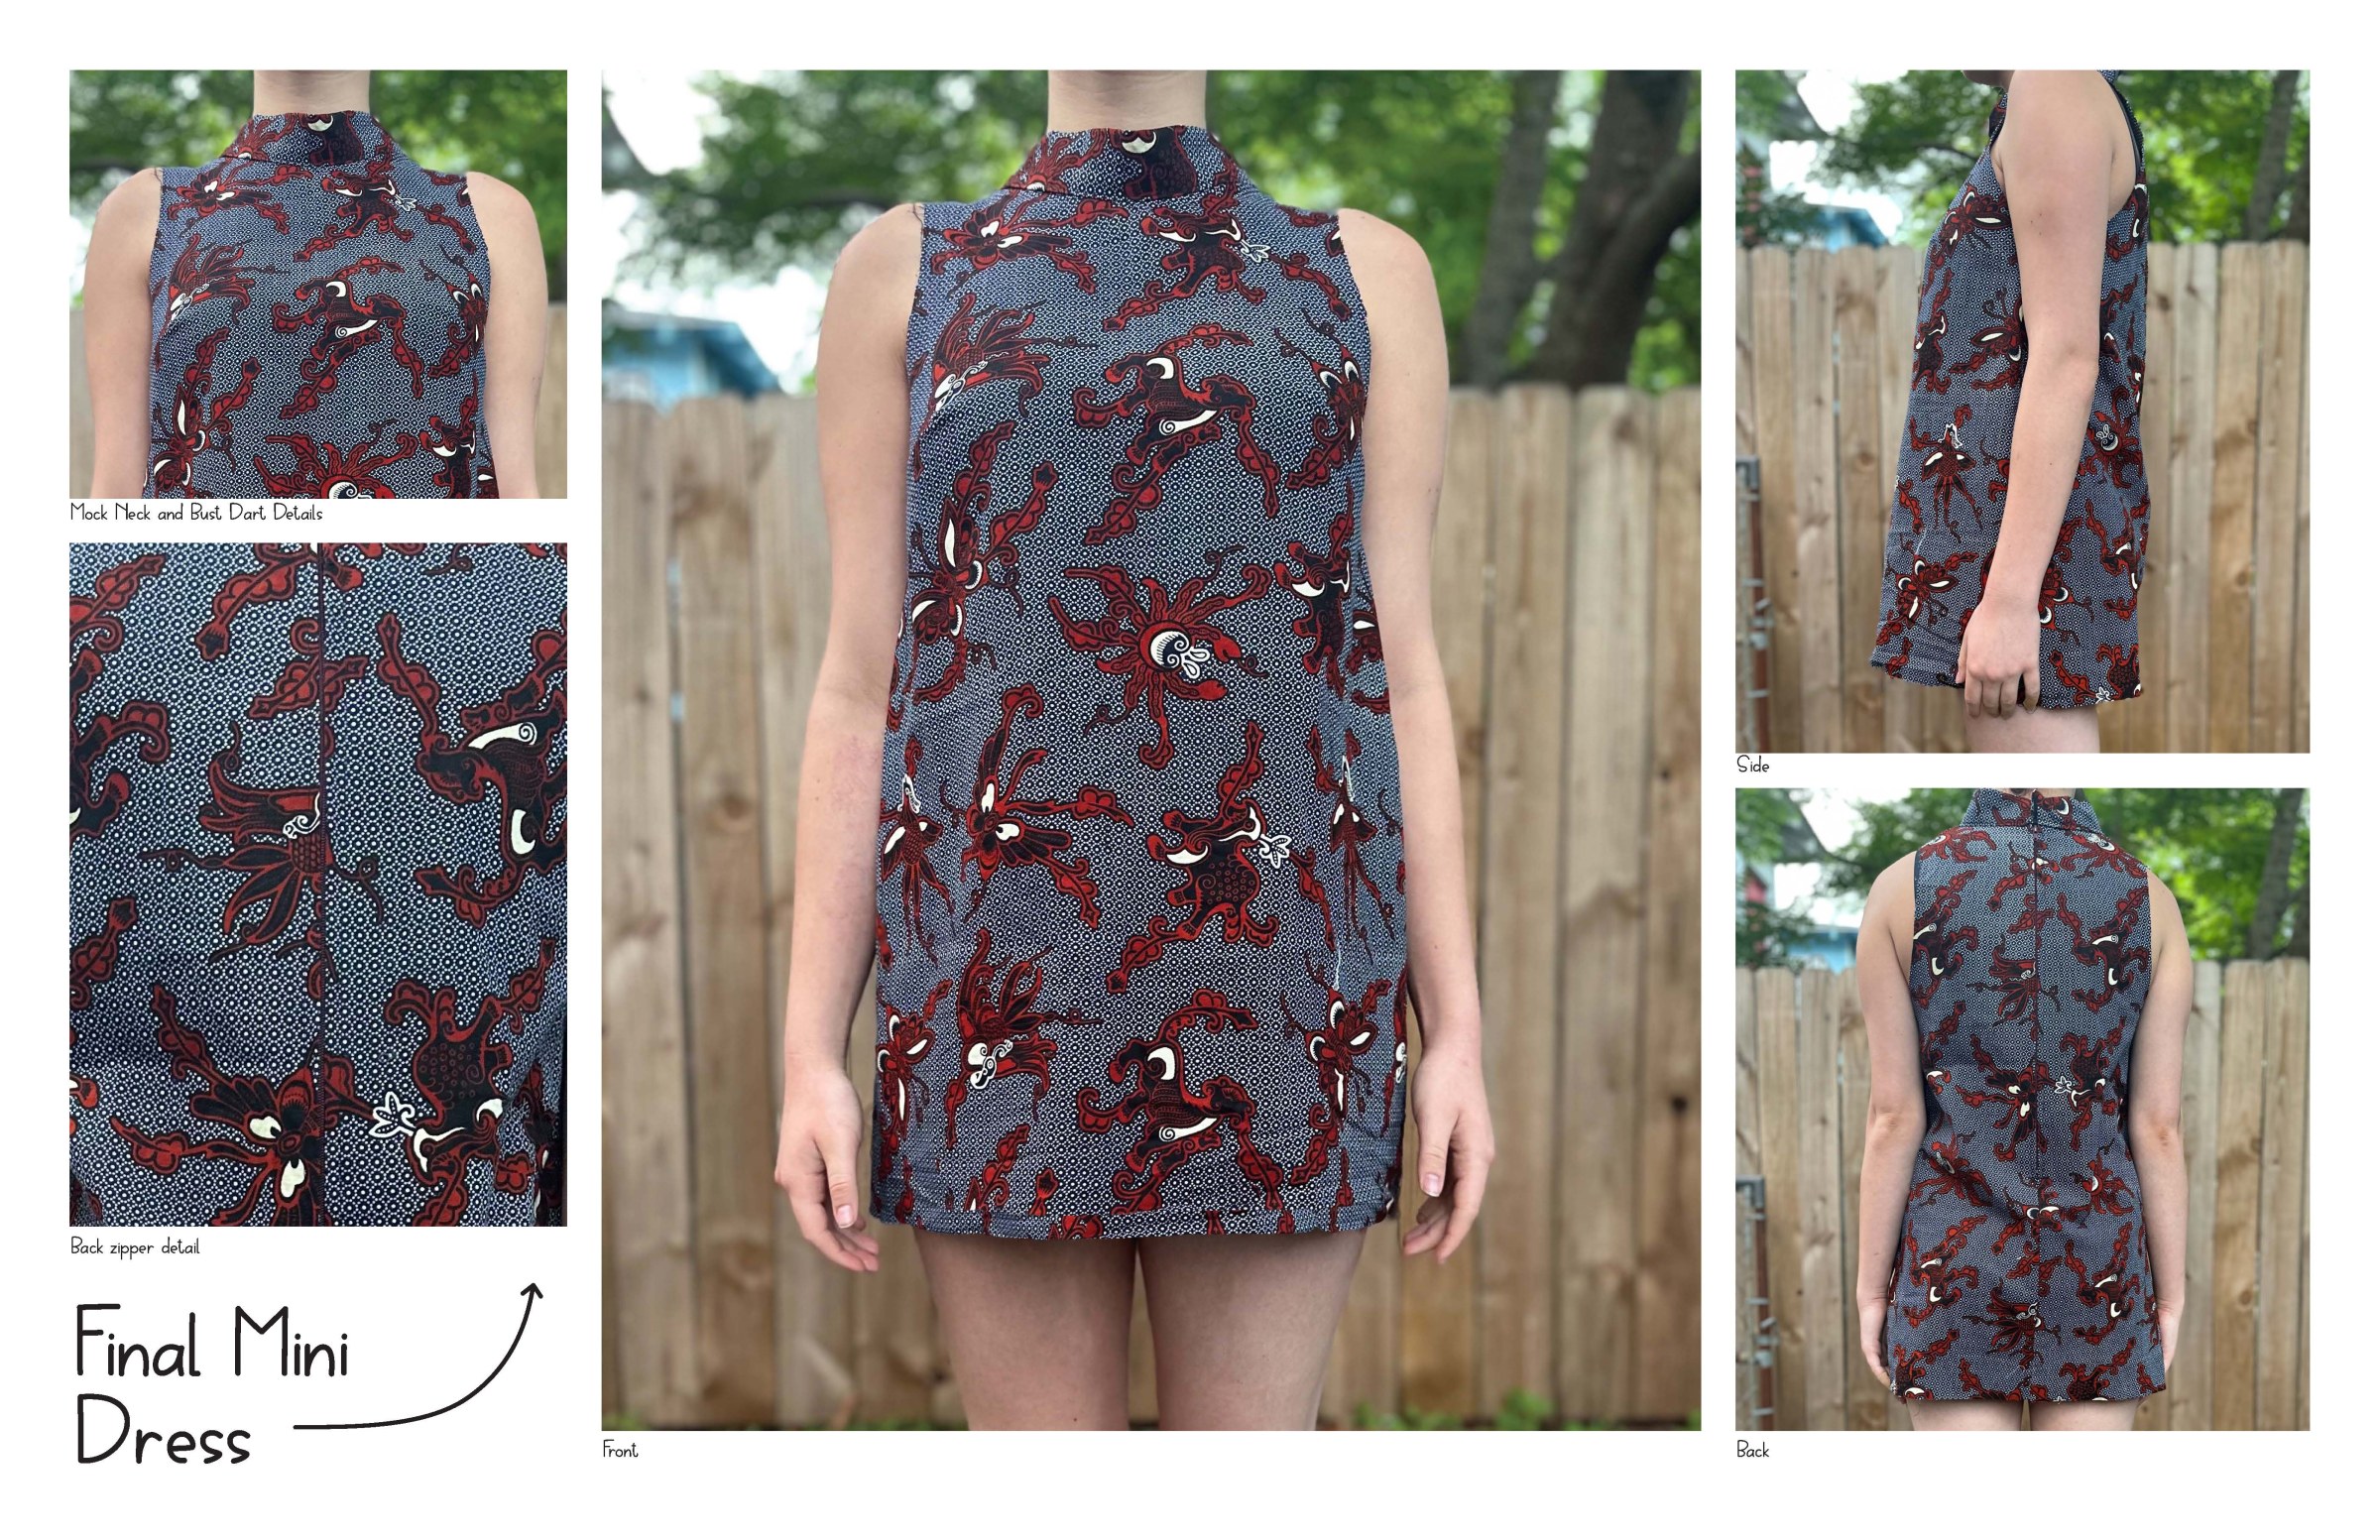 Textile Design Studio student's final dress